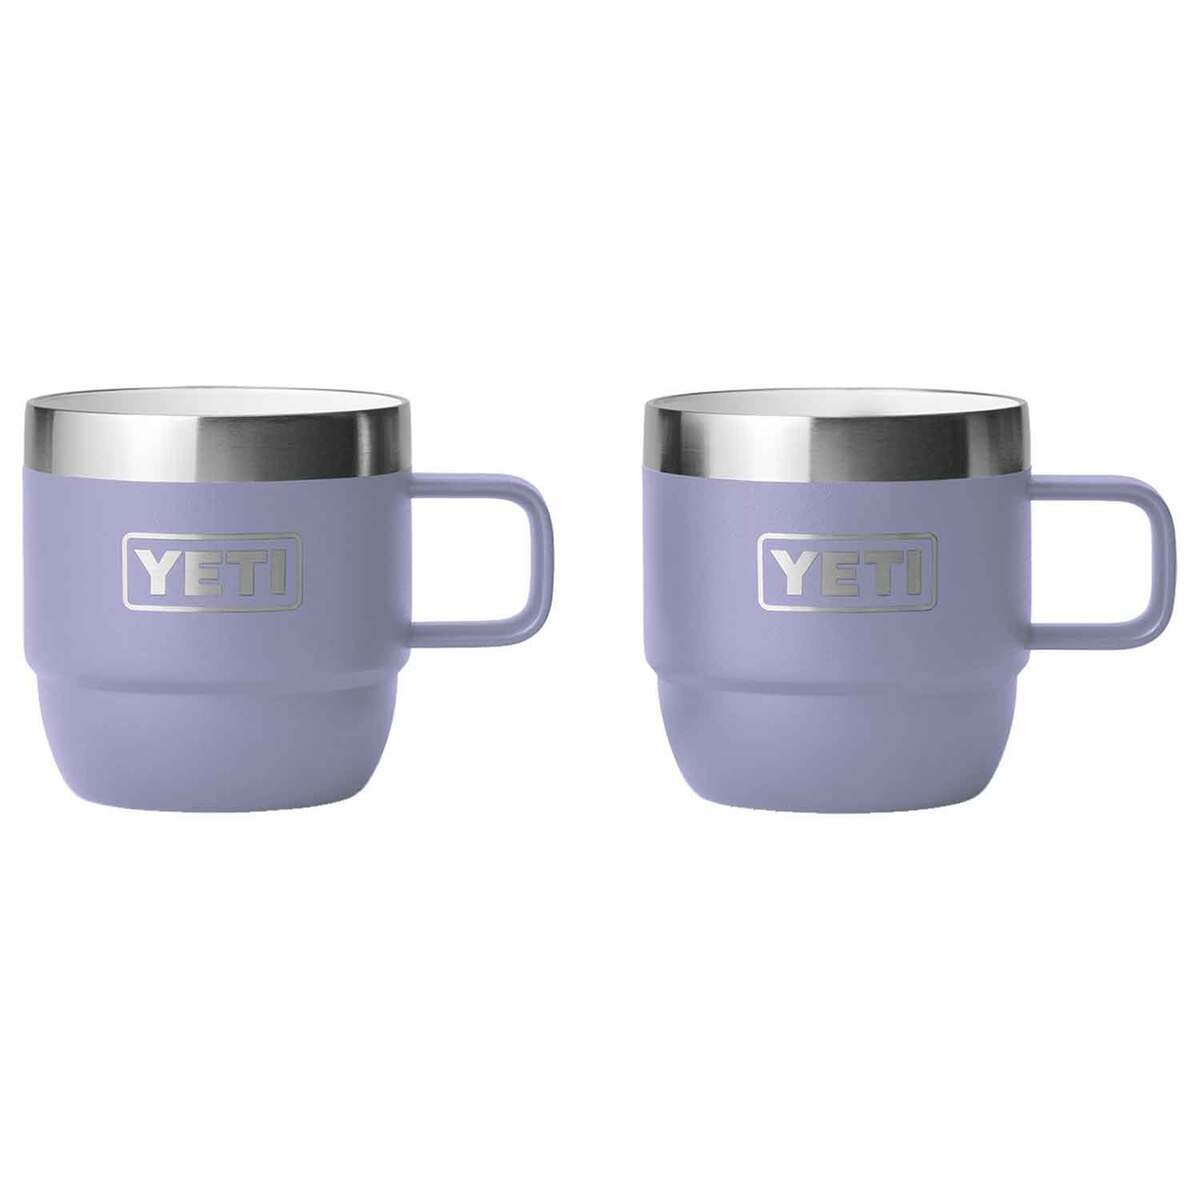 Yeti Espresso Cup 6oz 2 Pack Cosmic Lilac